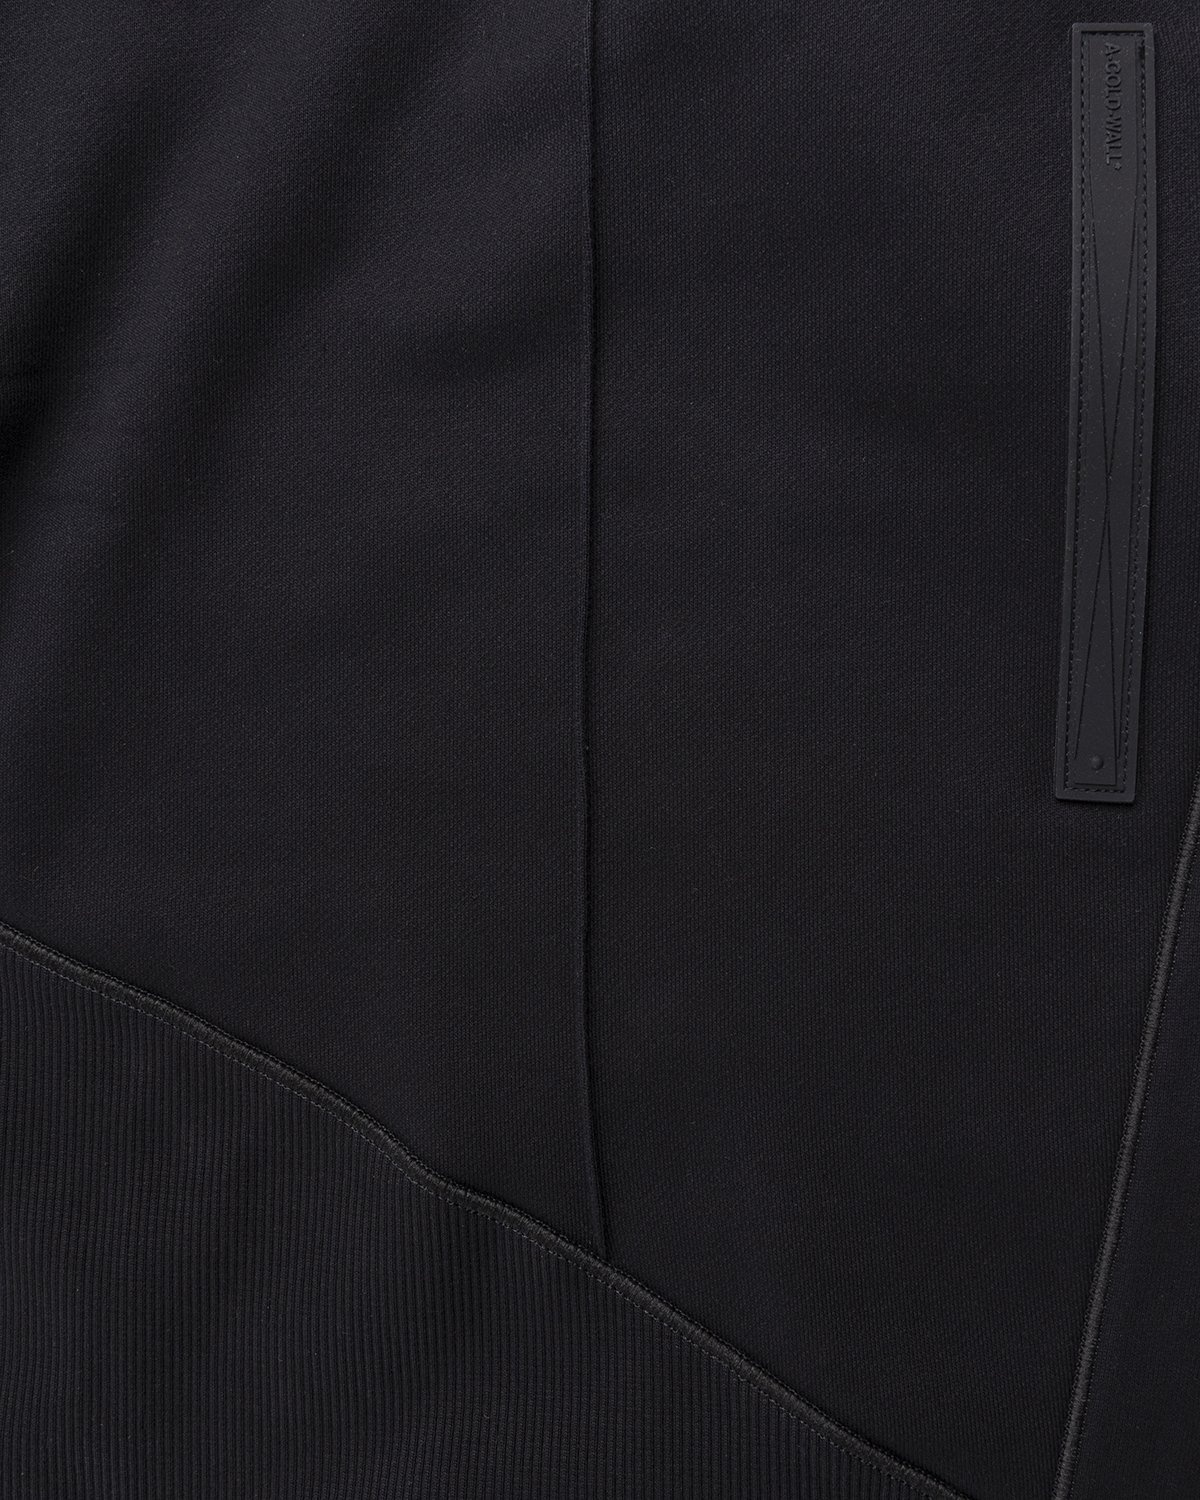 A-Cold-Wall* – Granular Sweatpants Black - Pants - Black - Image 6